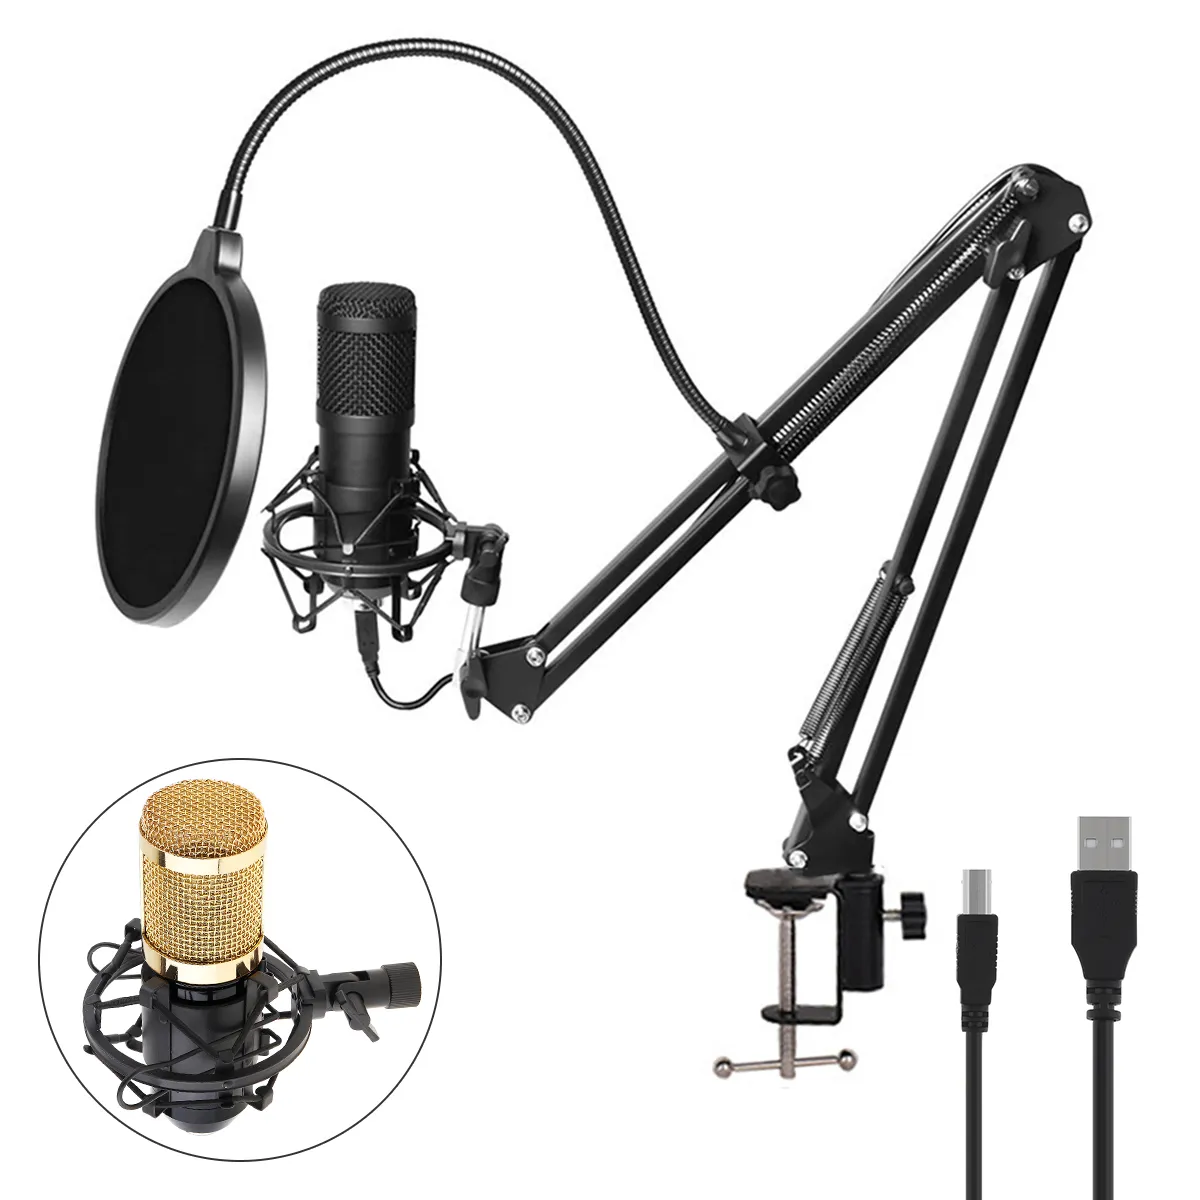 BM-800 USB-kondensormikrofon 192KHz / 24bit mikrofonsatser f￶r datorkaraoke-mikrofon f￶r ljud / studioinspelning